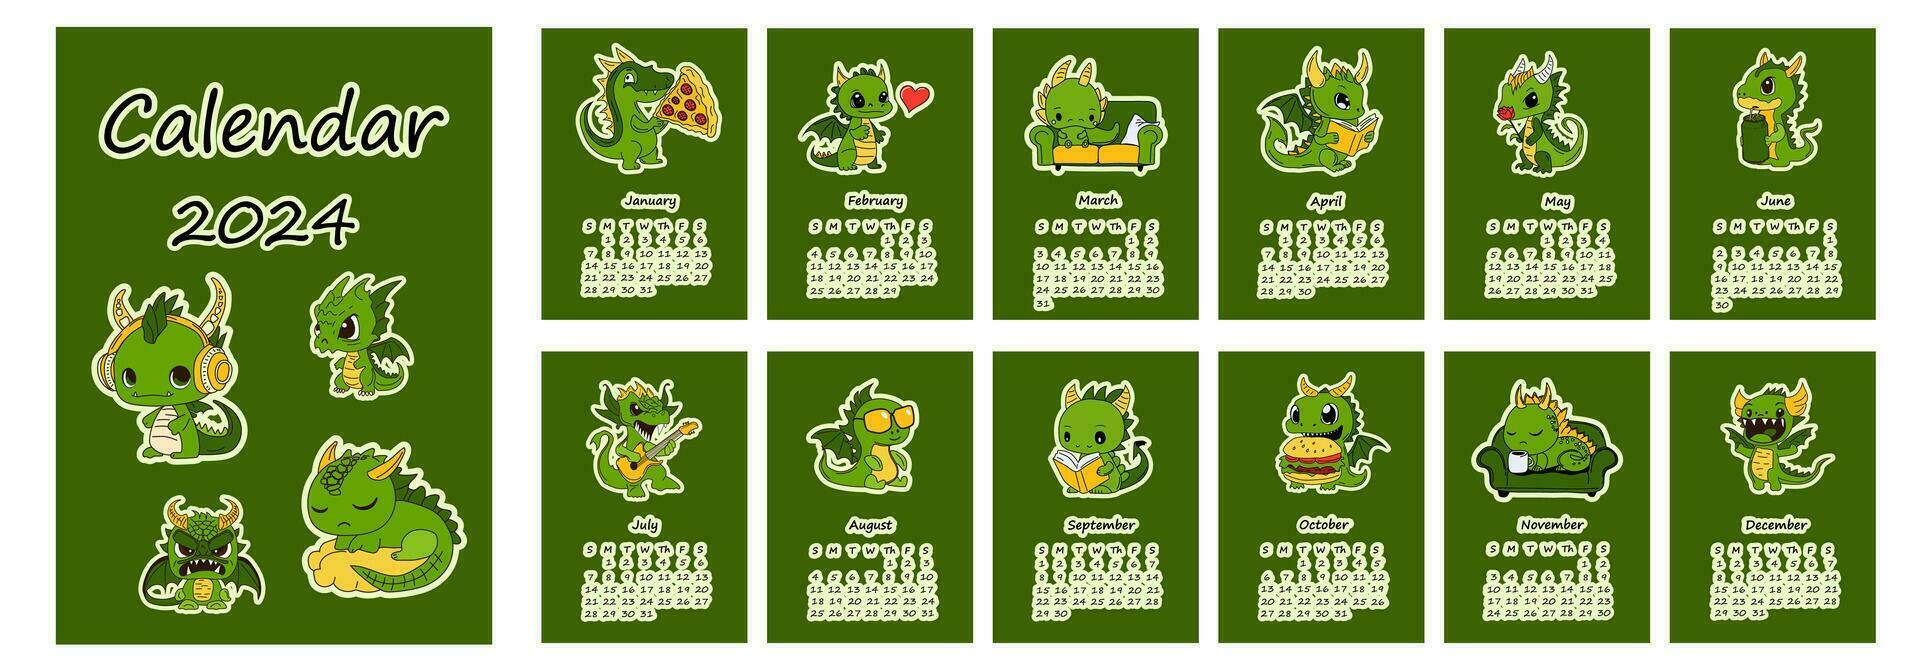 2024 calendar with green dragons design. Calendar planner minimal style, annual organizer. Vector illustration